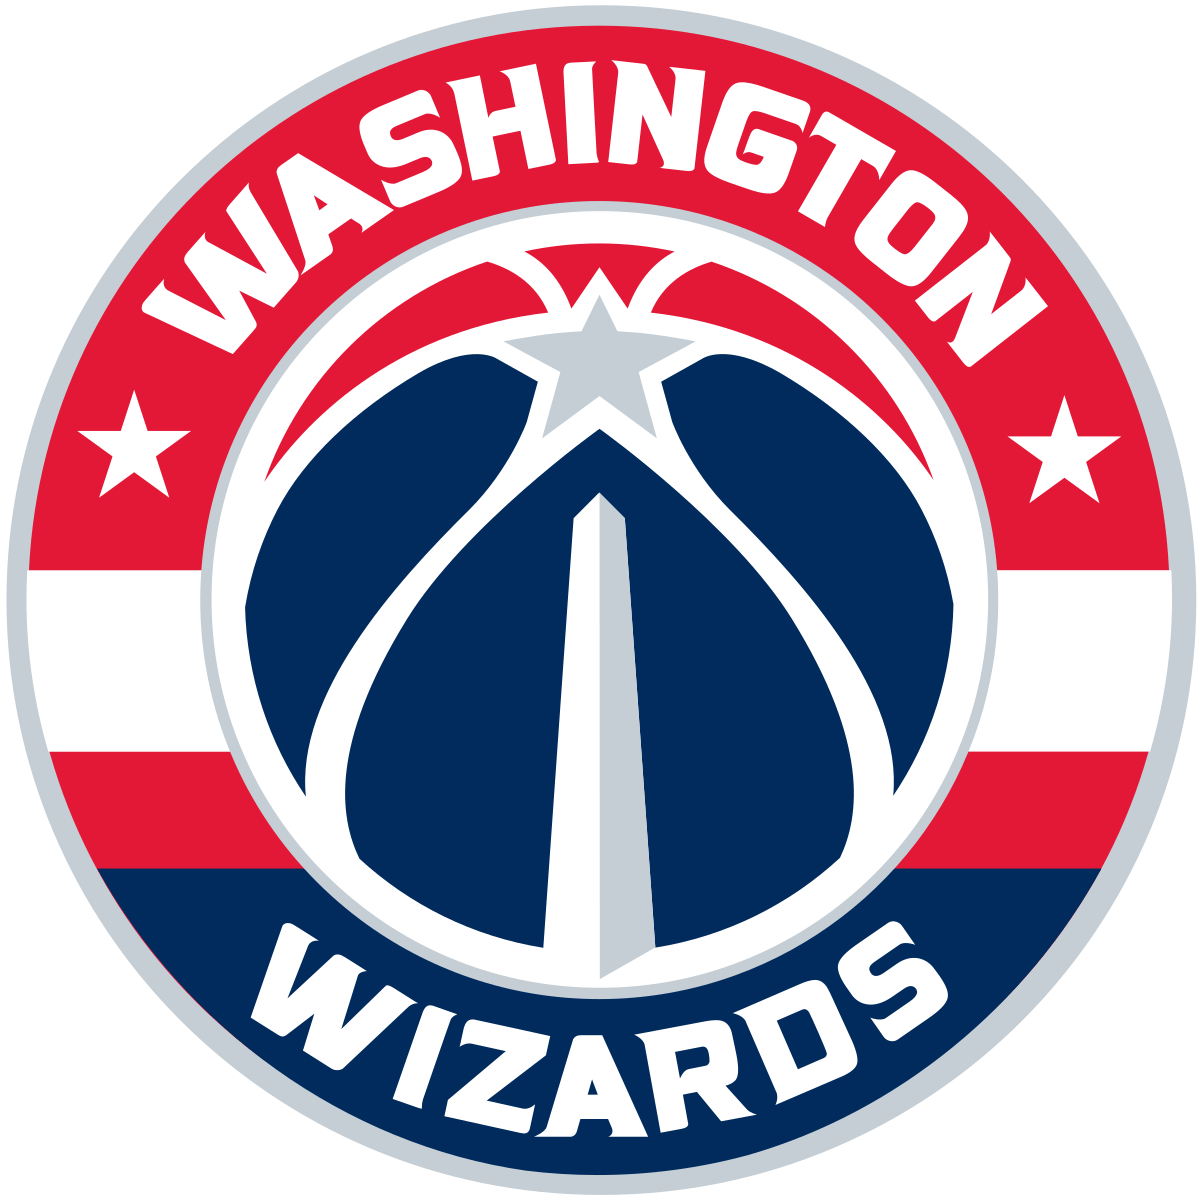 Baltimore Basketball Logo - Washington Wizards